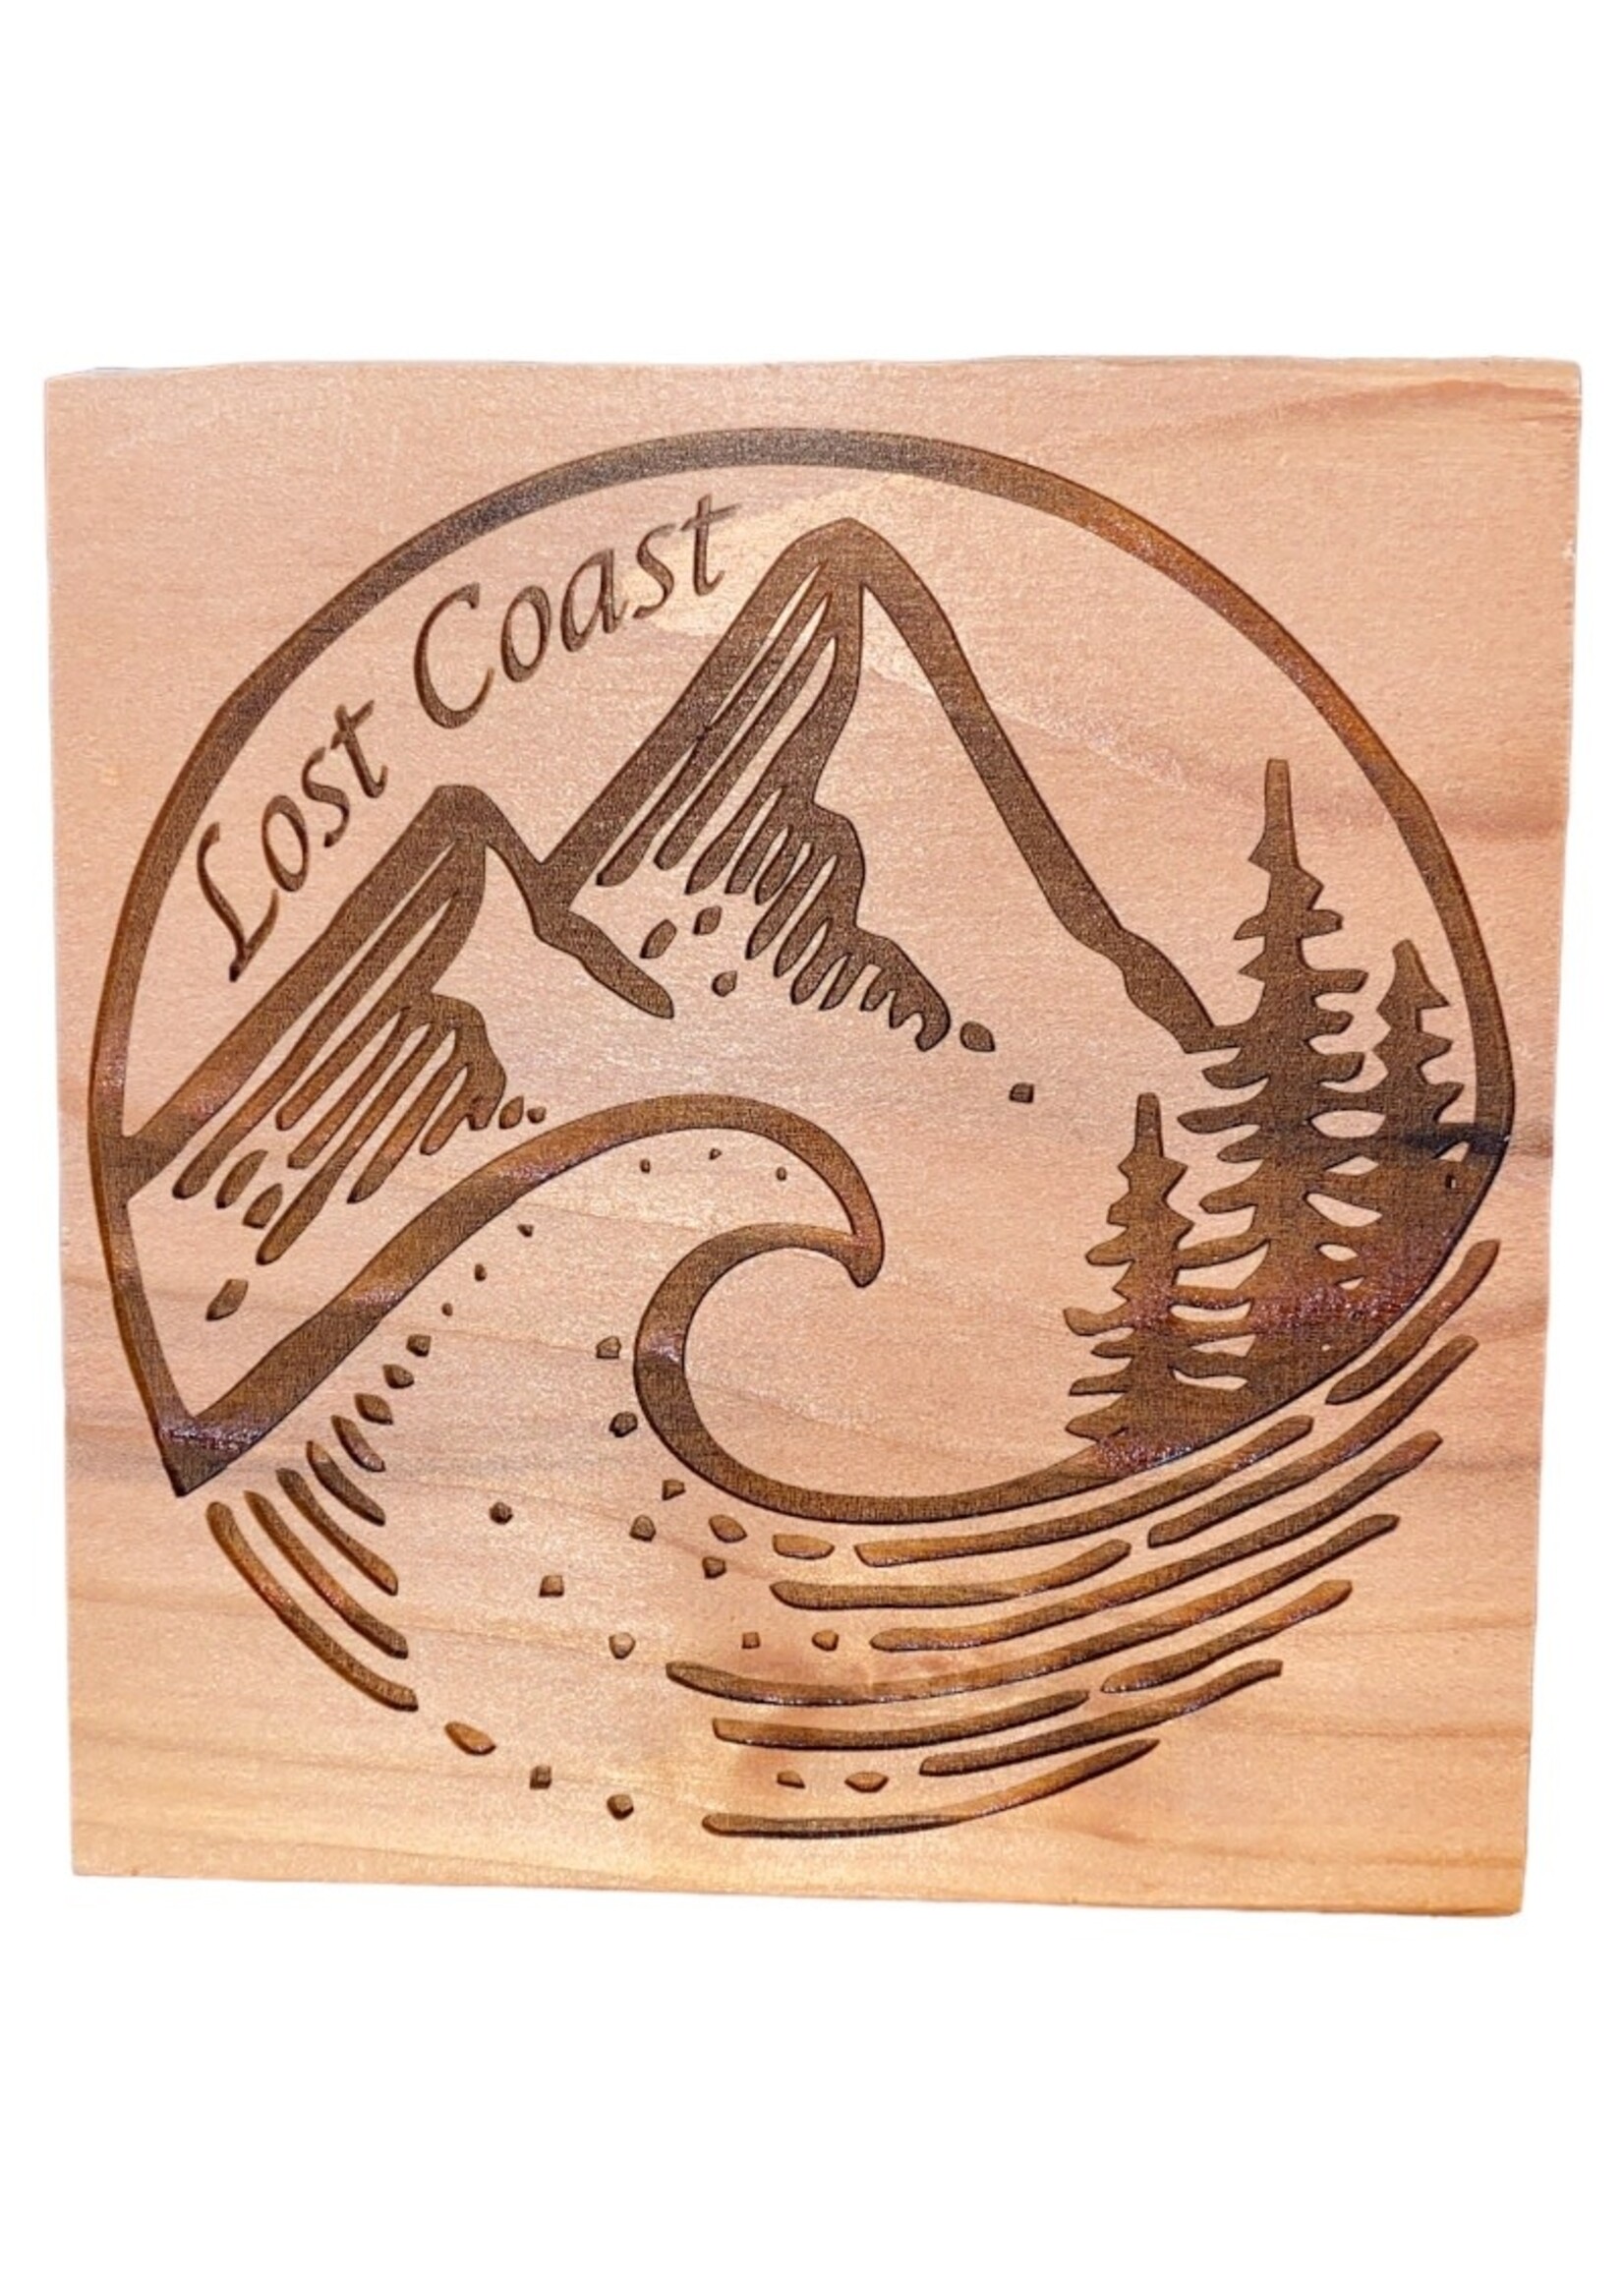 Grandfather Tree Redwood Shelf Sitter - Lost Coast 5.5”